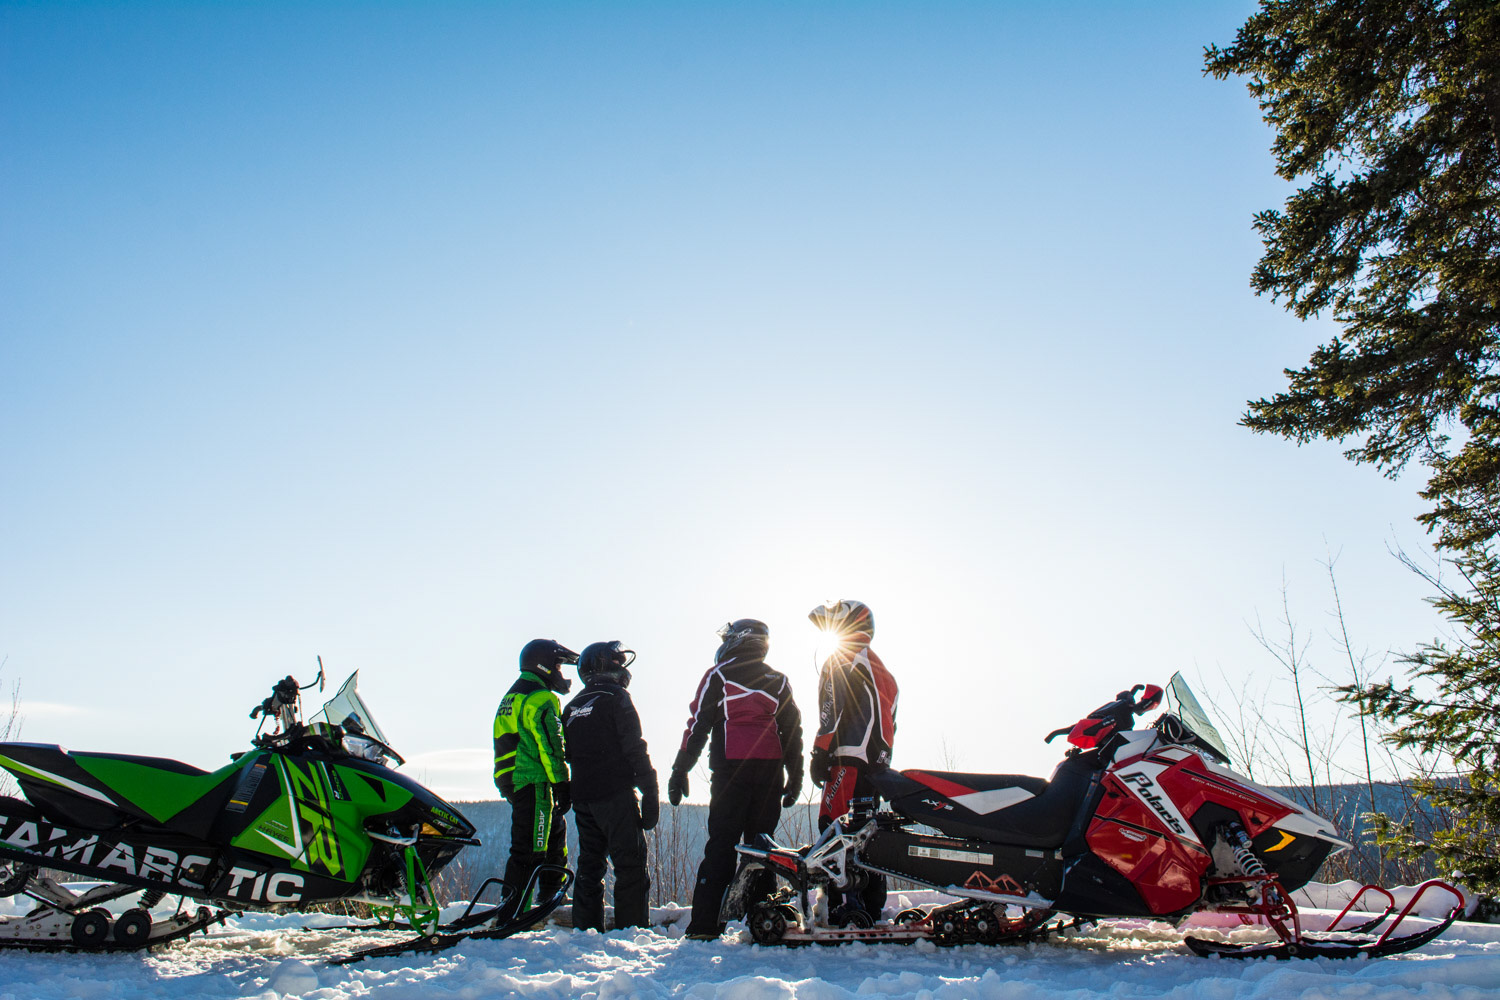 feb10-11 2015-Tourism New Brunswick-T4G Kick-winter 2015-New Brunswick Great Northern Odyssey-snowmobile trip-Mount Carleton-NB-photo by Aaron McKenzie Fraser-www.amfraser.com-_AMF3671.jpg